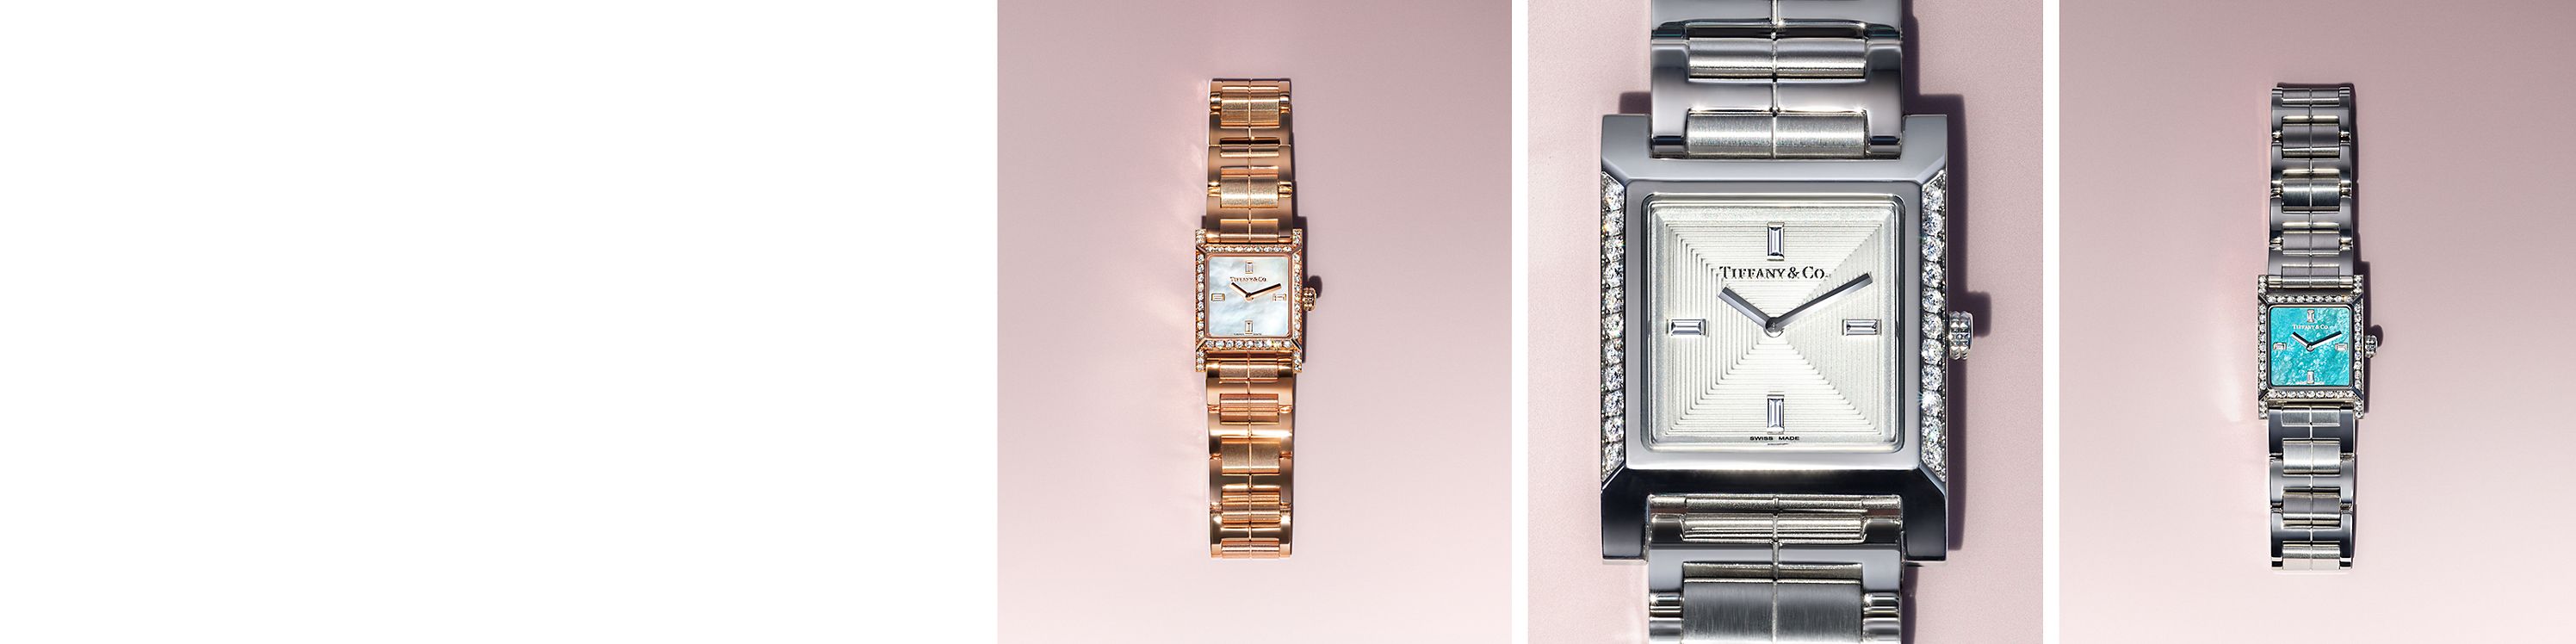 Tiffany & Co. Women’s Watches 